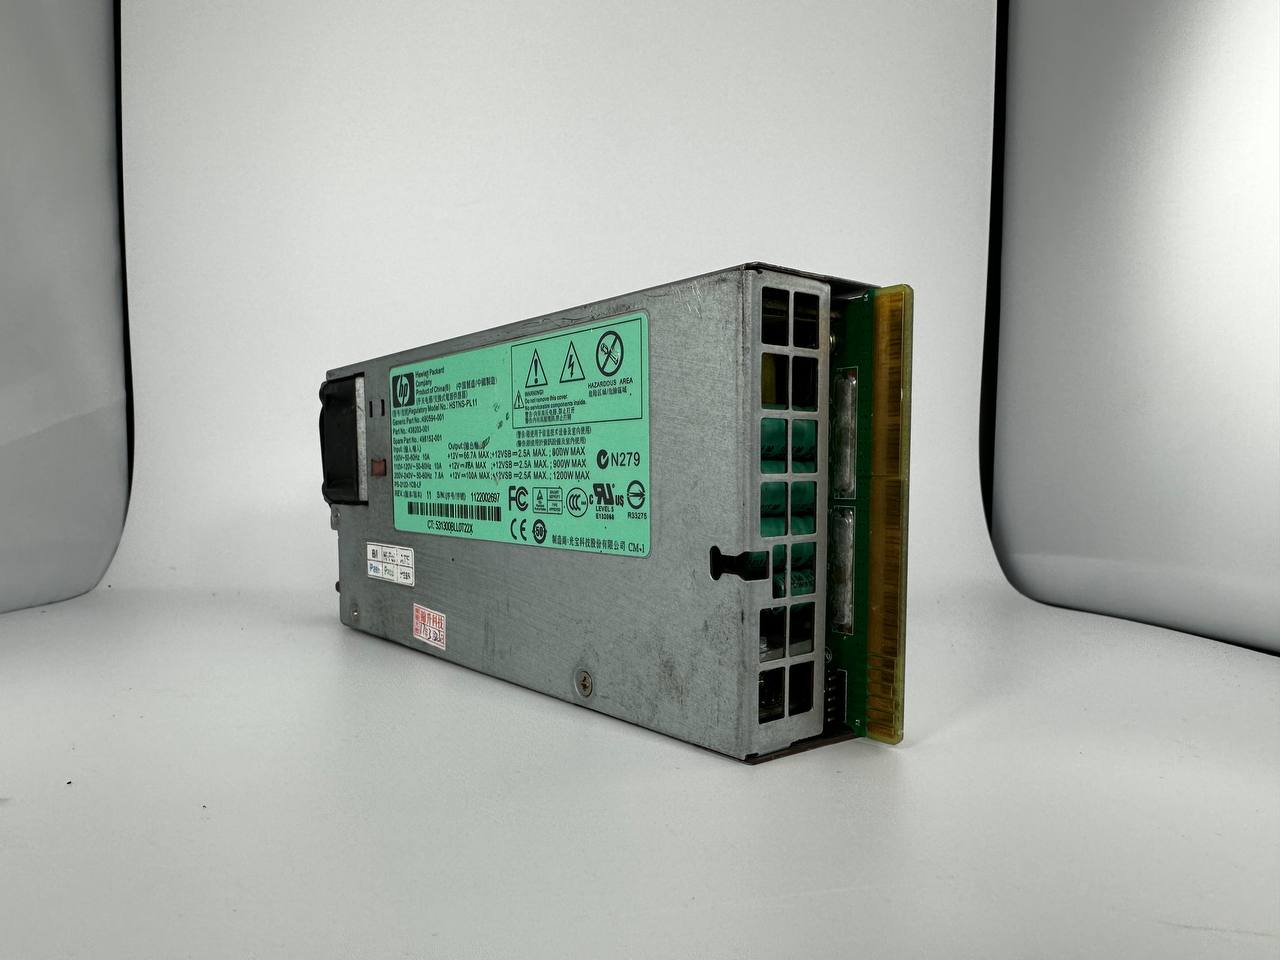 HP 1200w Server PSU - Nerd Gearz